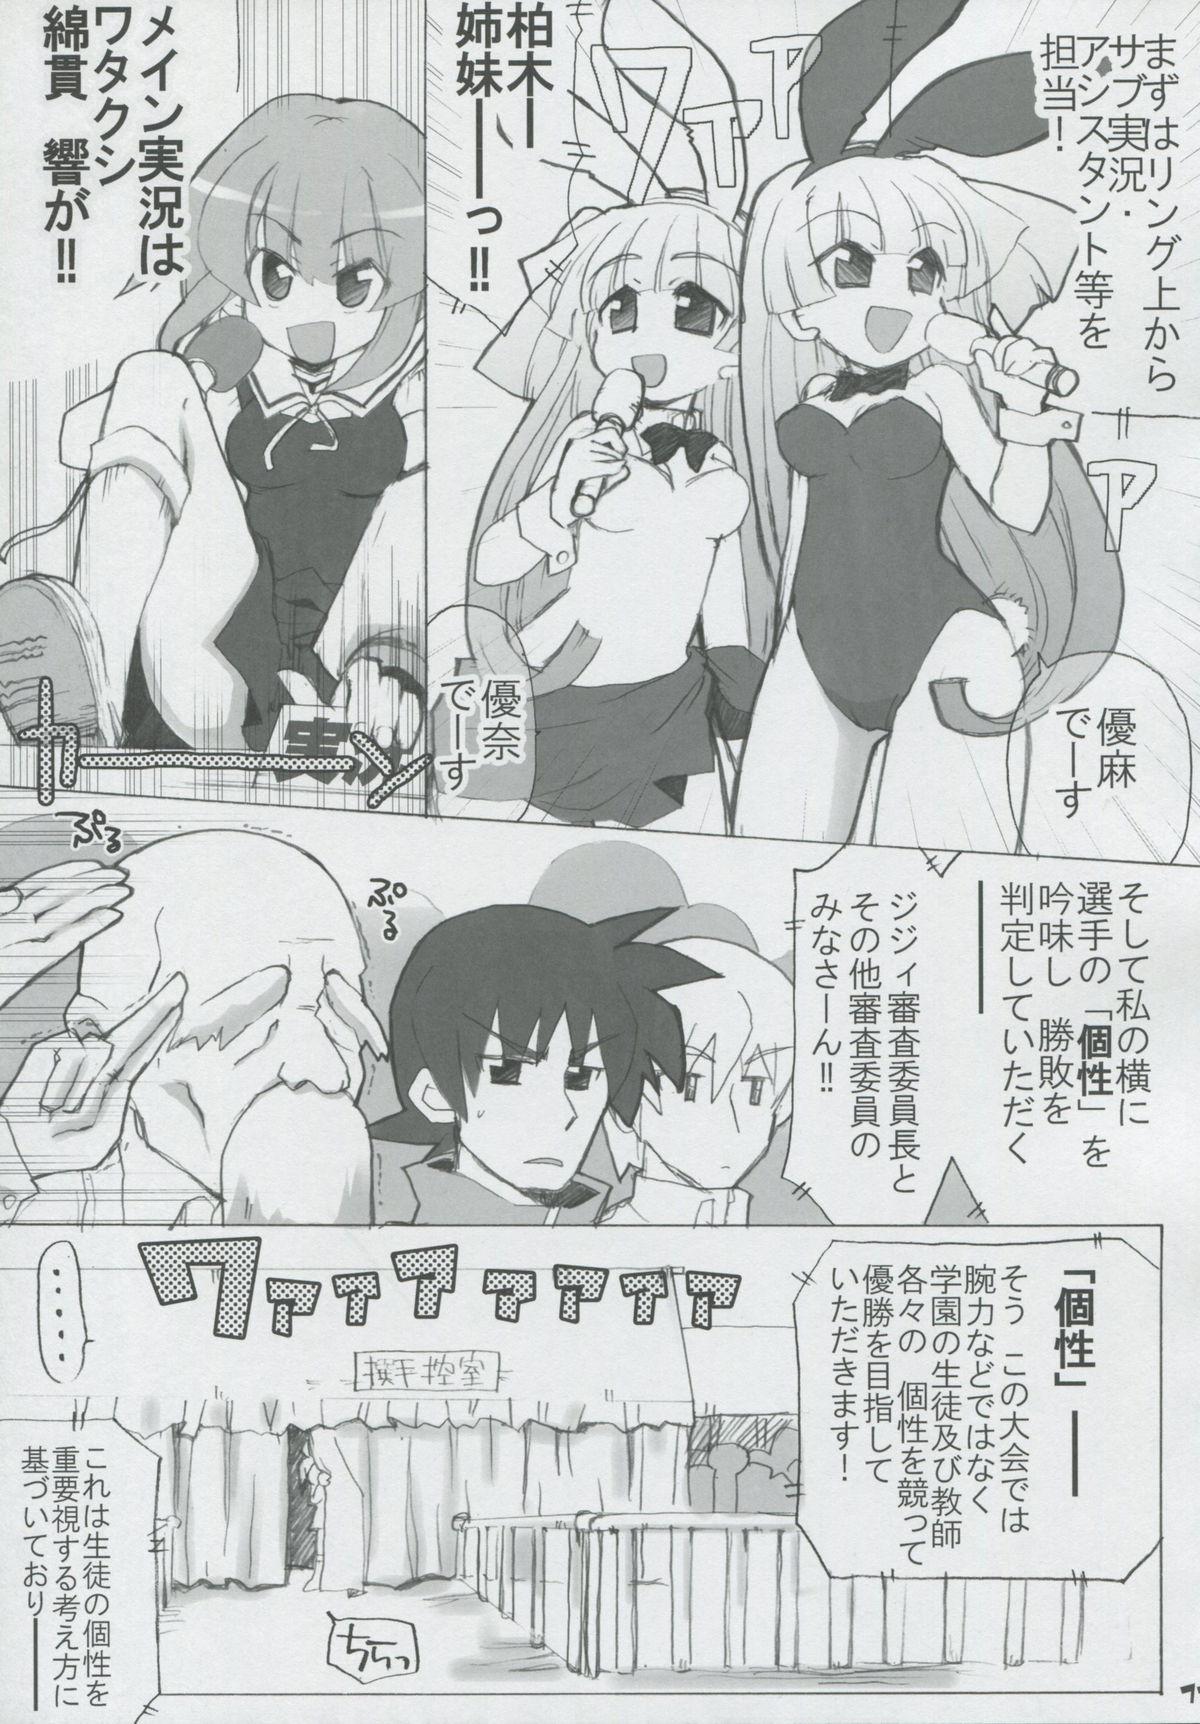 Teenie Momo Tsuki Monsters 1st-half - Pani poni dash Little - Page 10